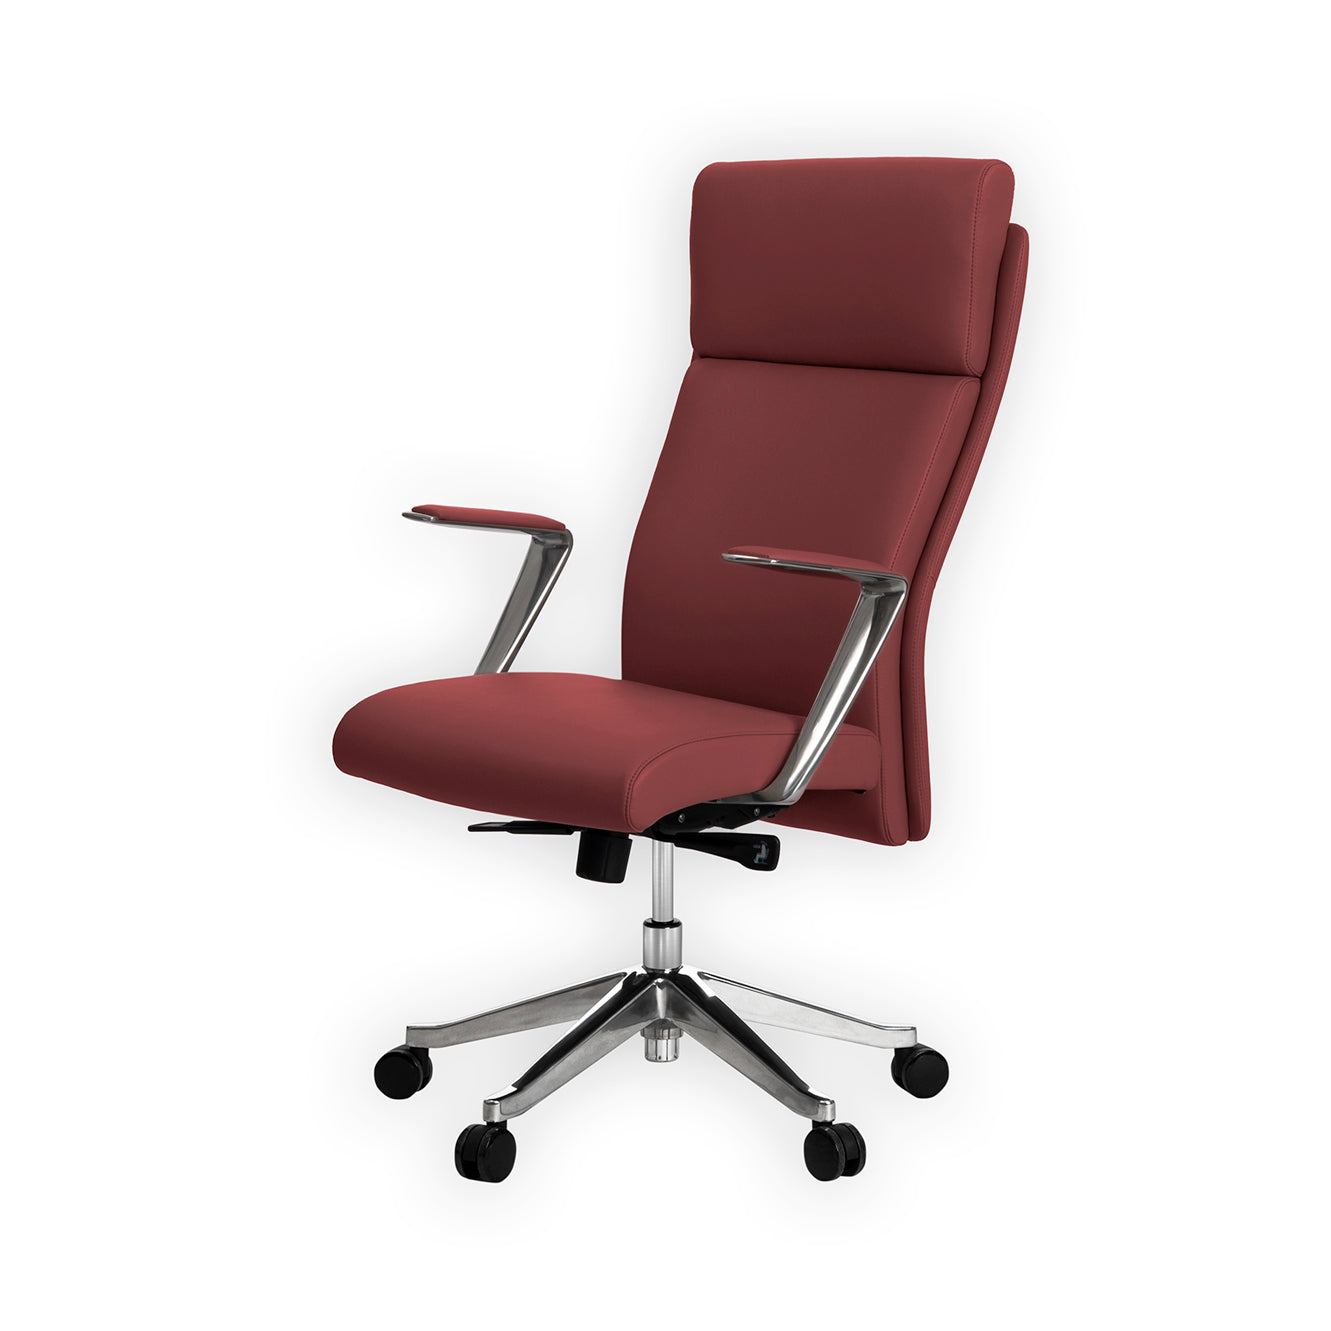 UJI Customer Chair - Red